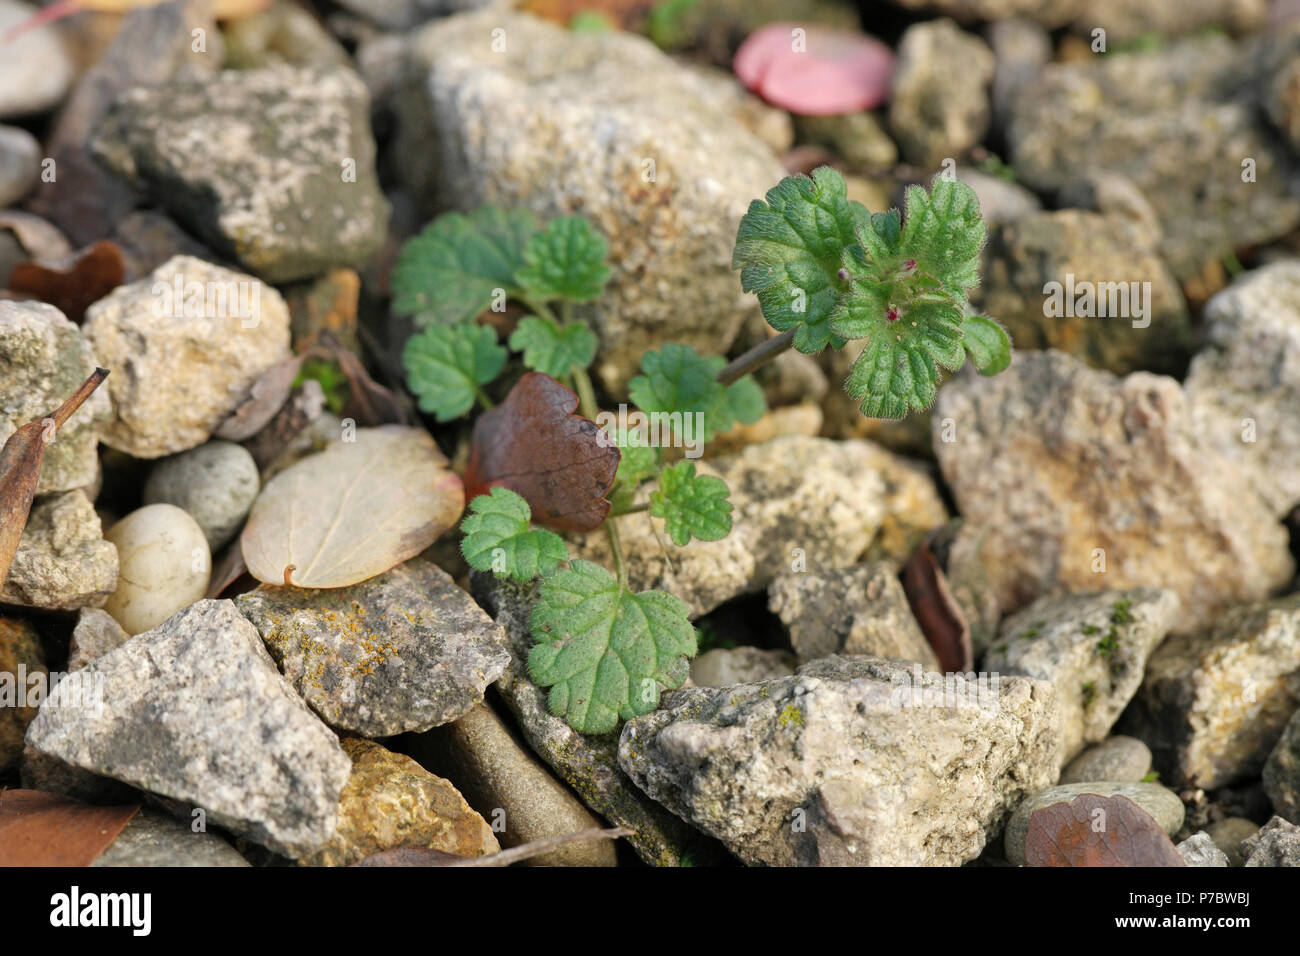 Lamium amplexicaule (Stengelumfassende Taubnessel) (henbit dead-nettle) (lamier amplexicaule) Stock Photo